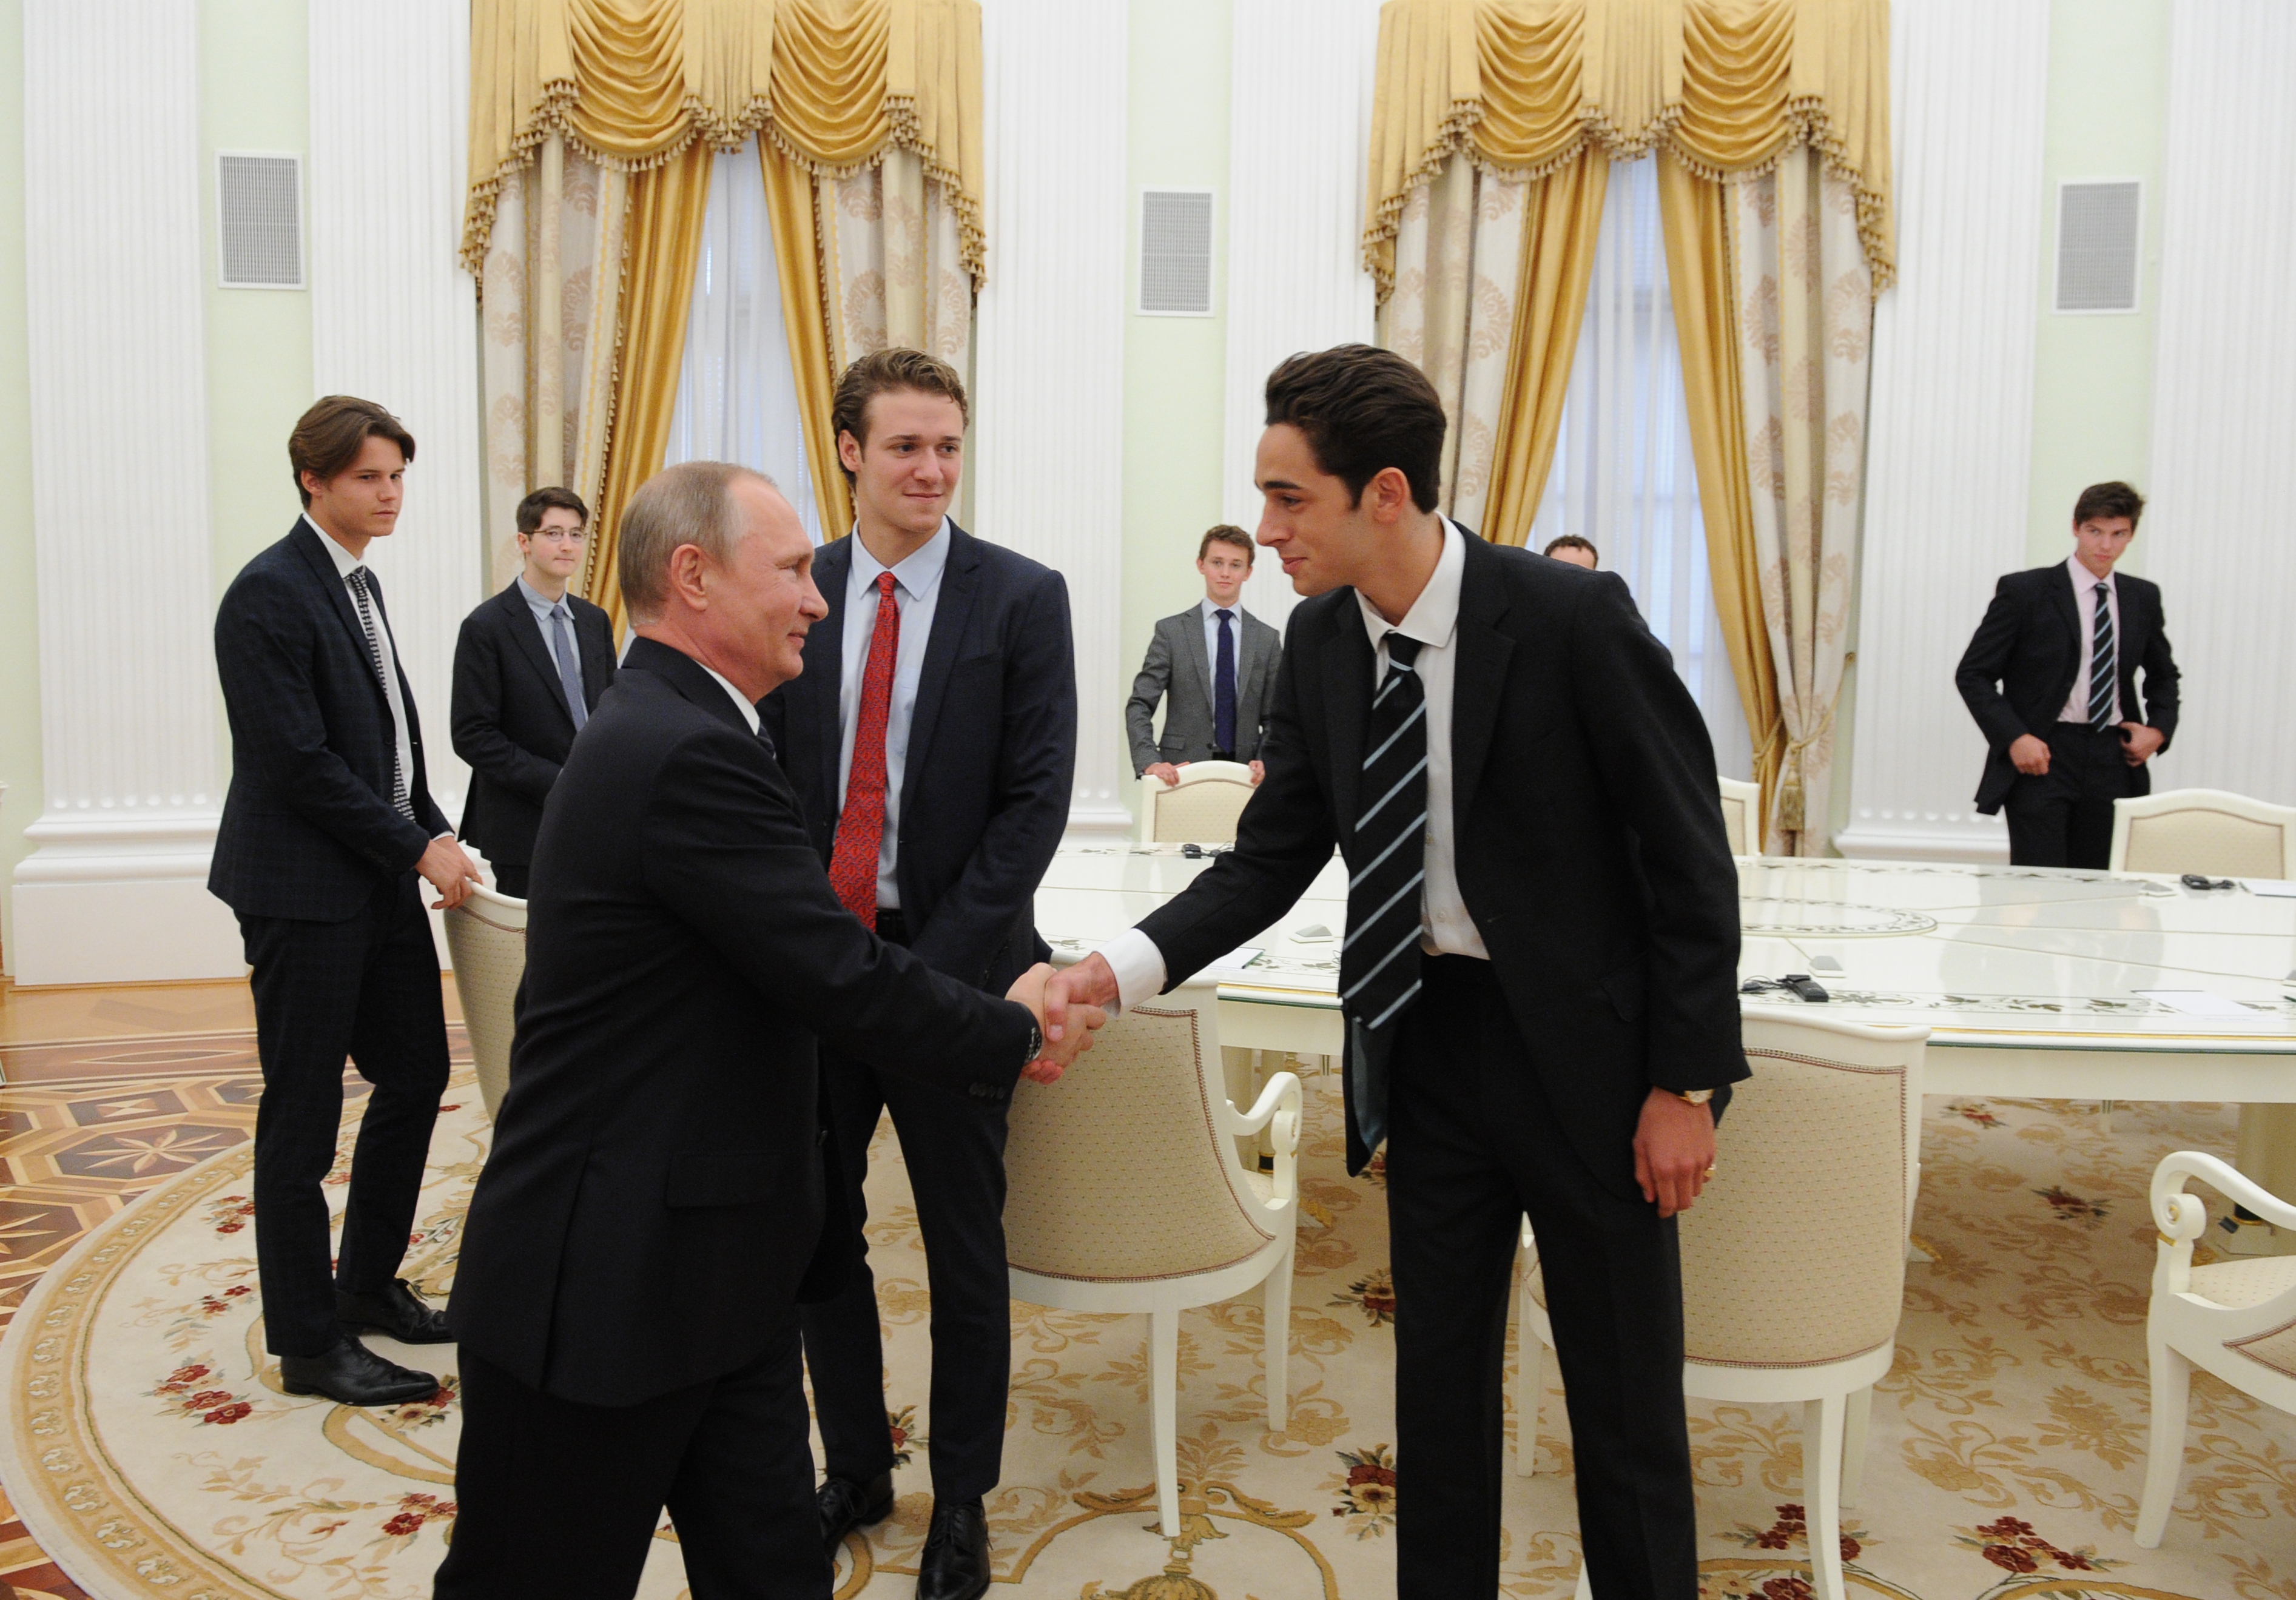 President Vladimir Putin meets with students at Eton College